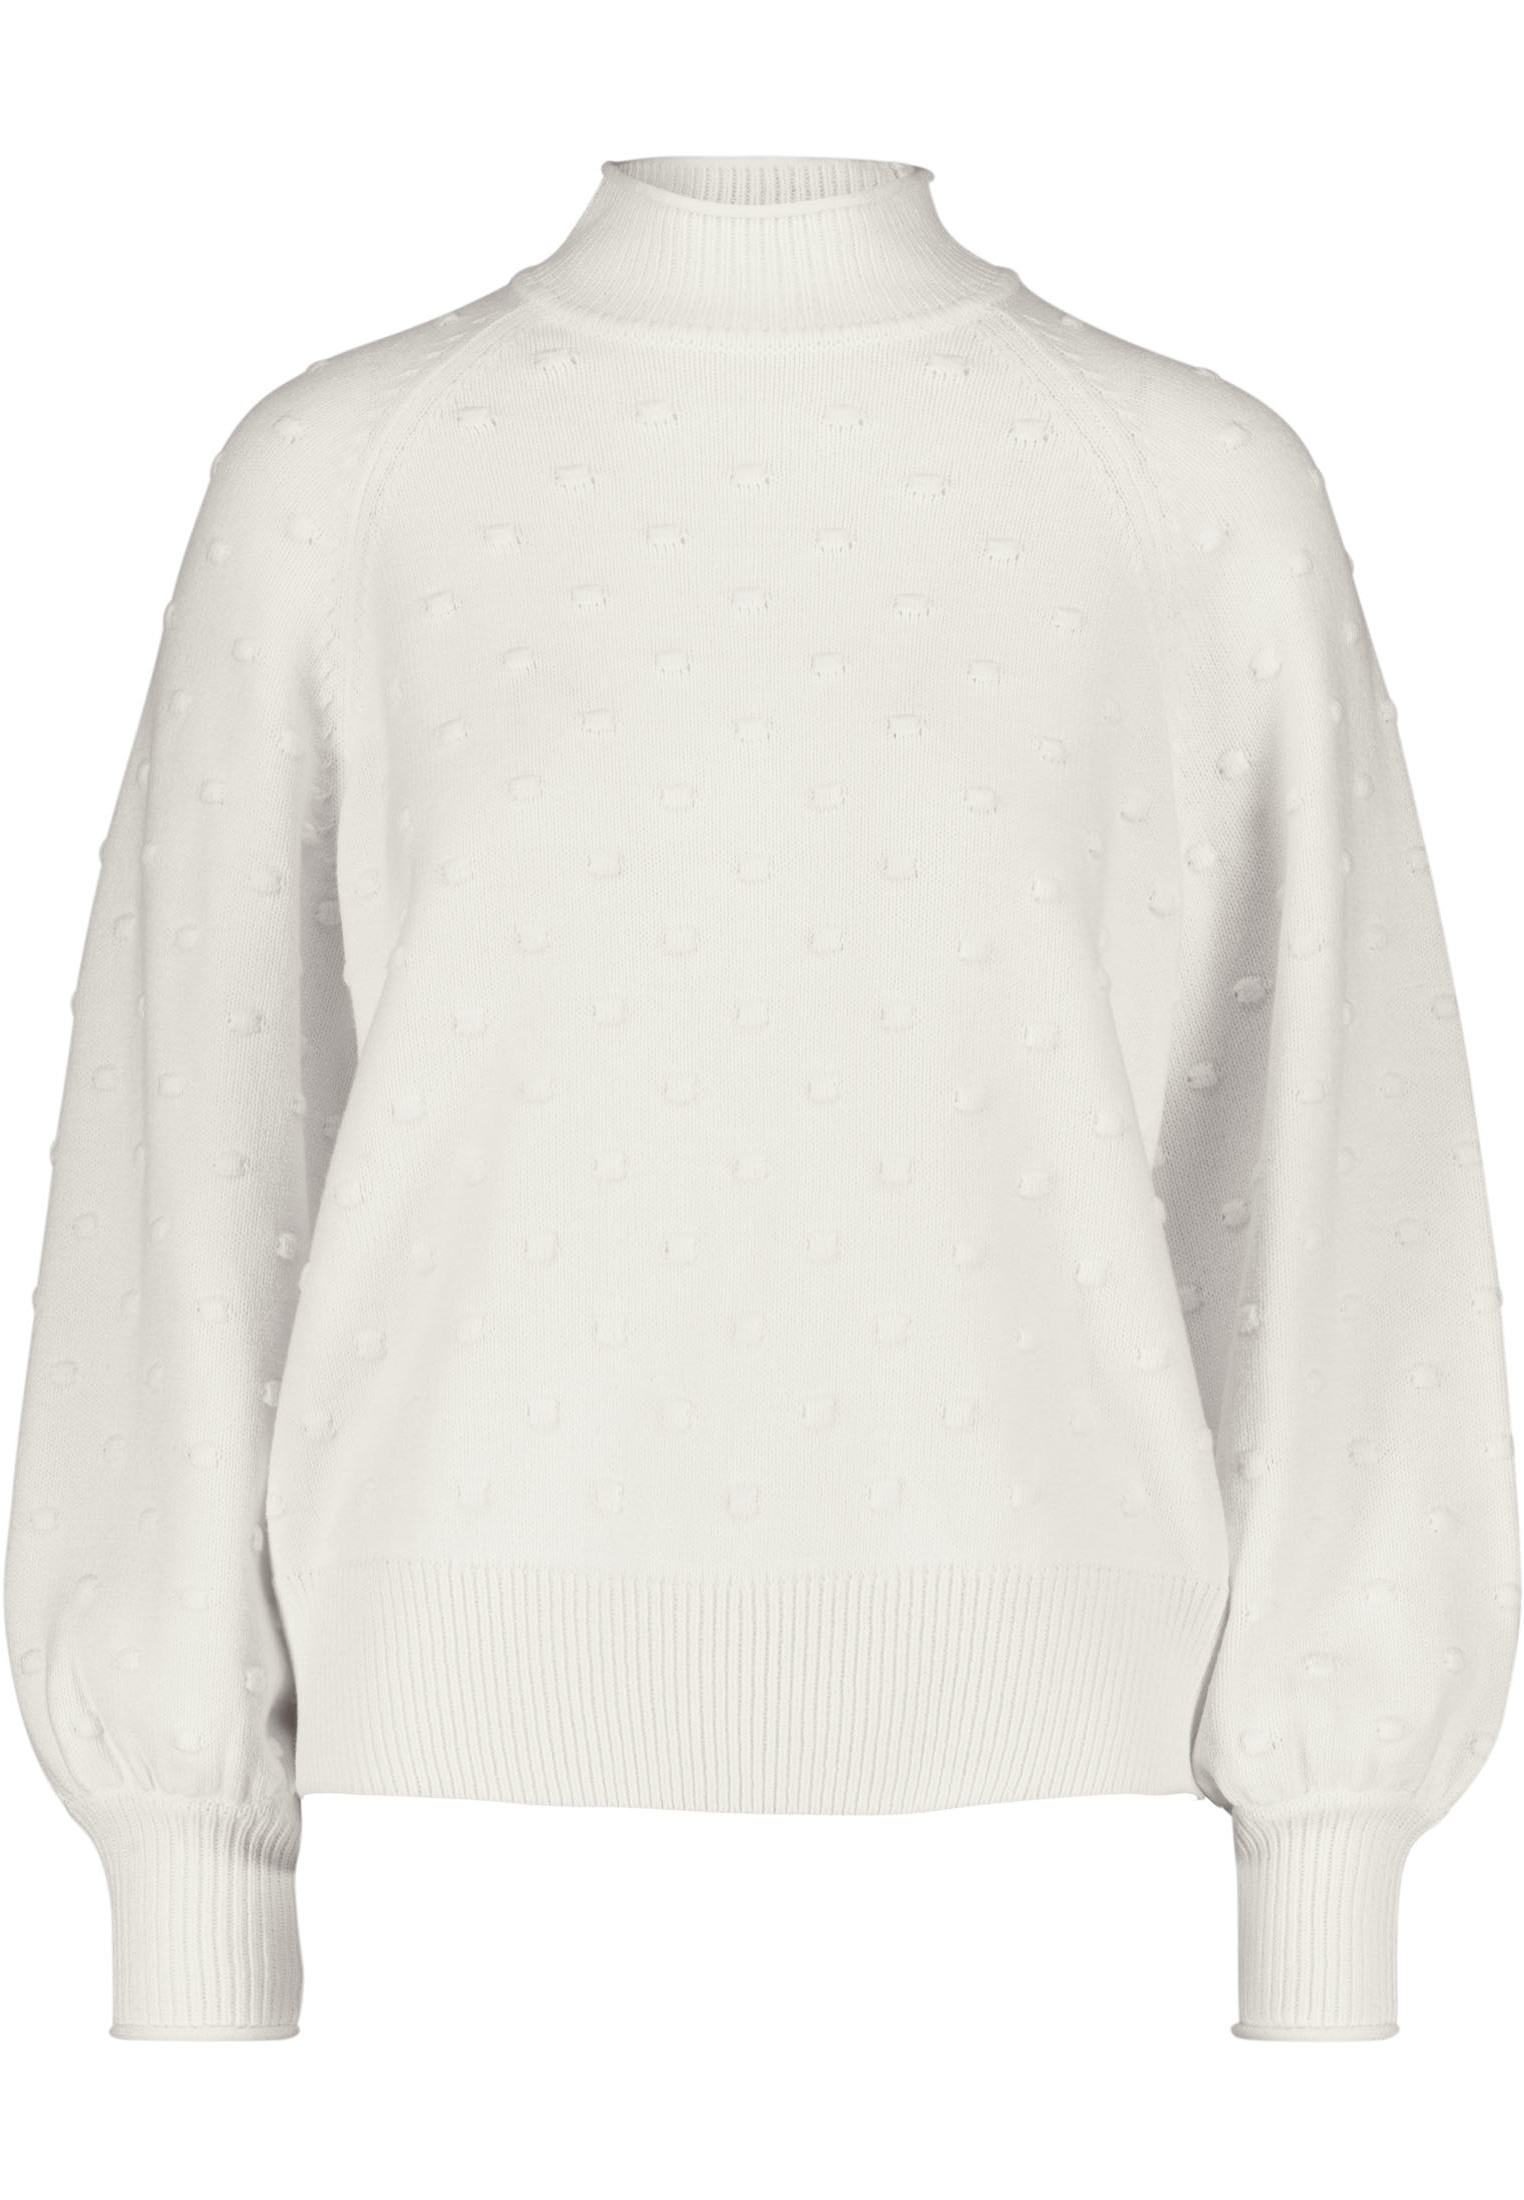 свитер zero mit punktstickerei цвет arabesque Свитер Zero mit Punktestickerei, белый